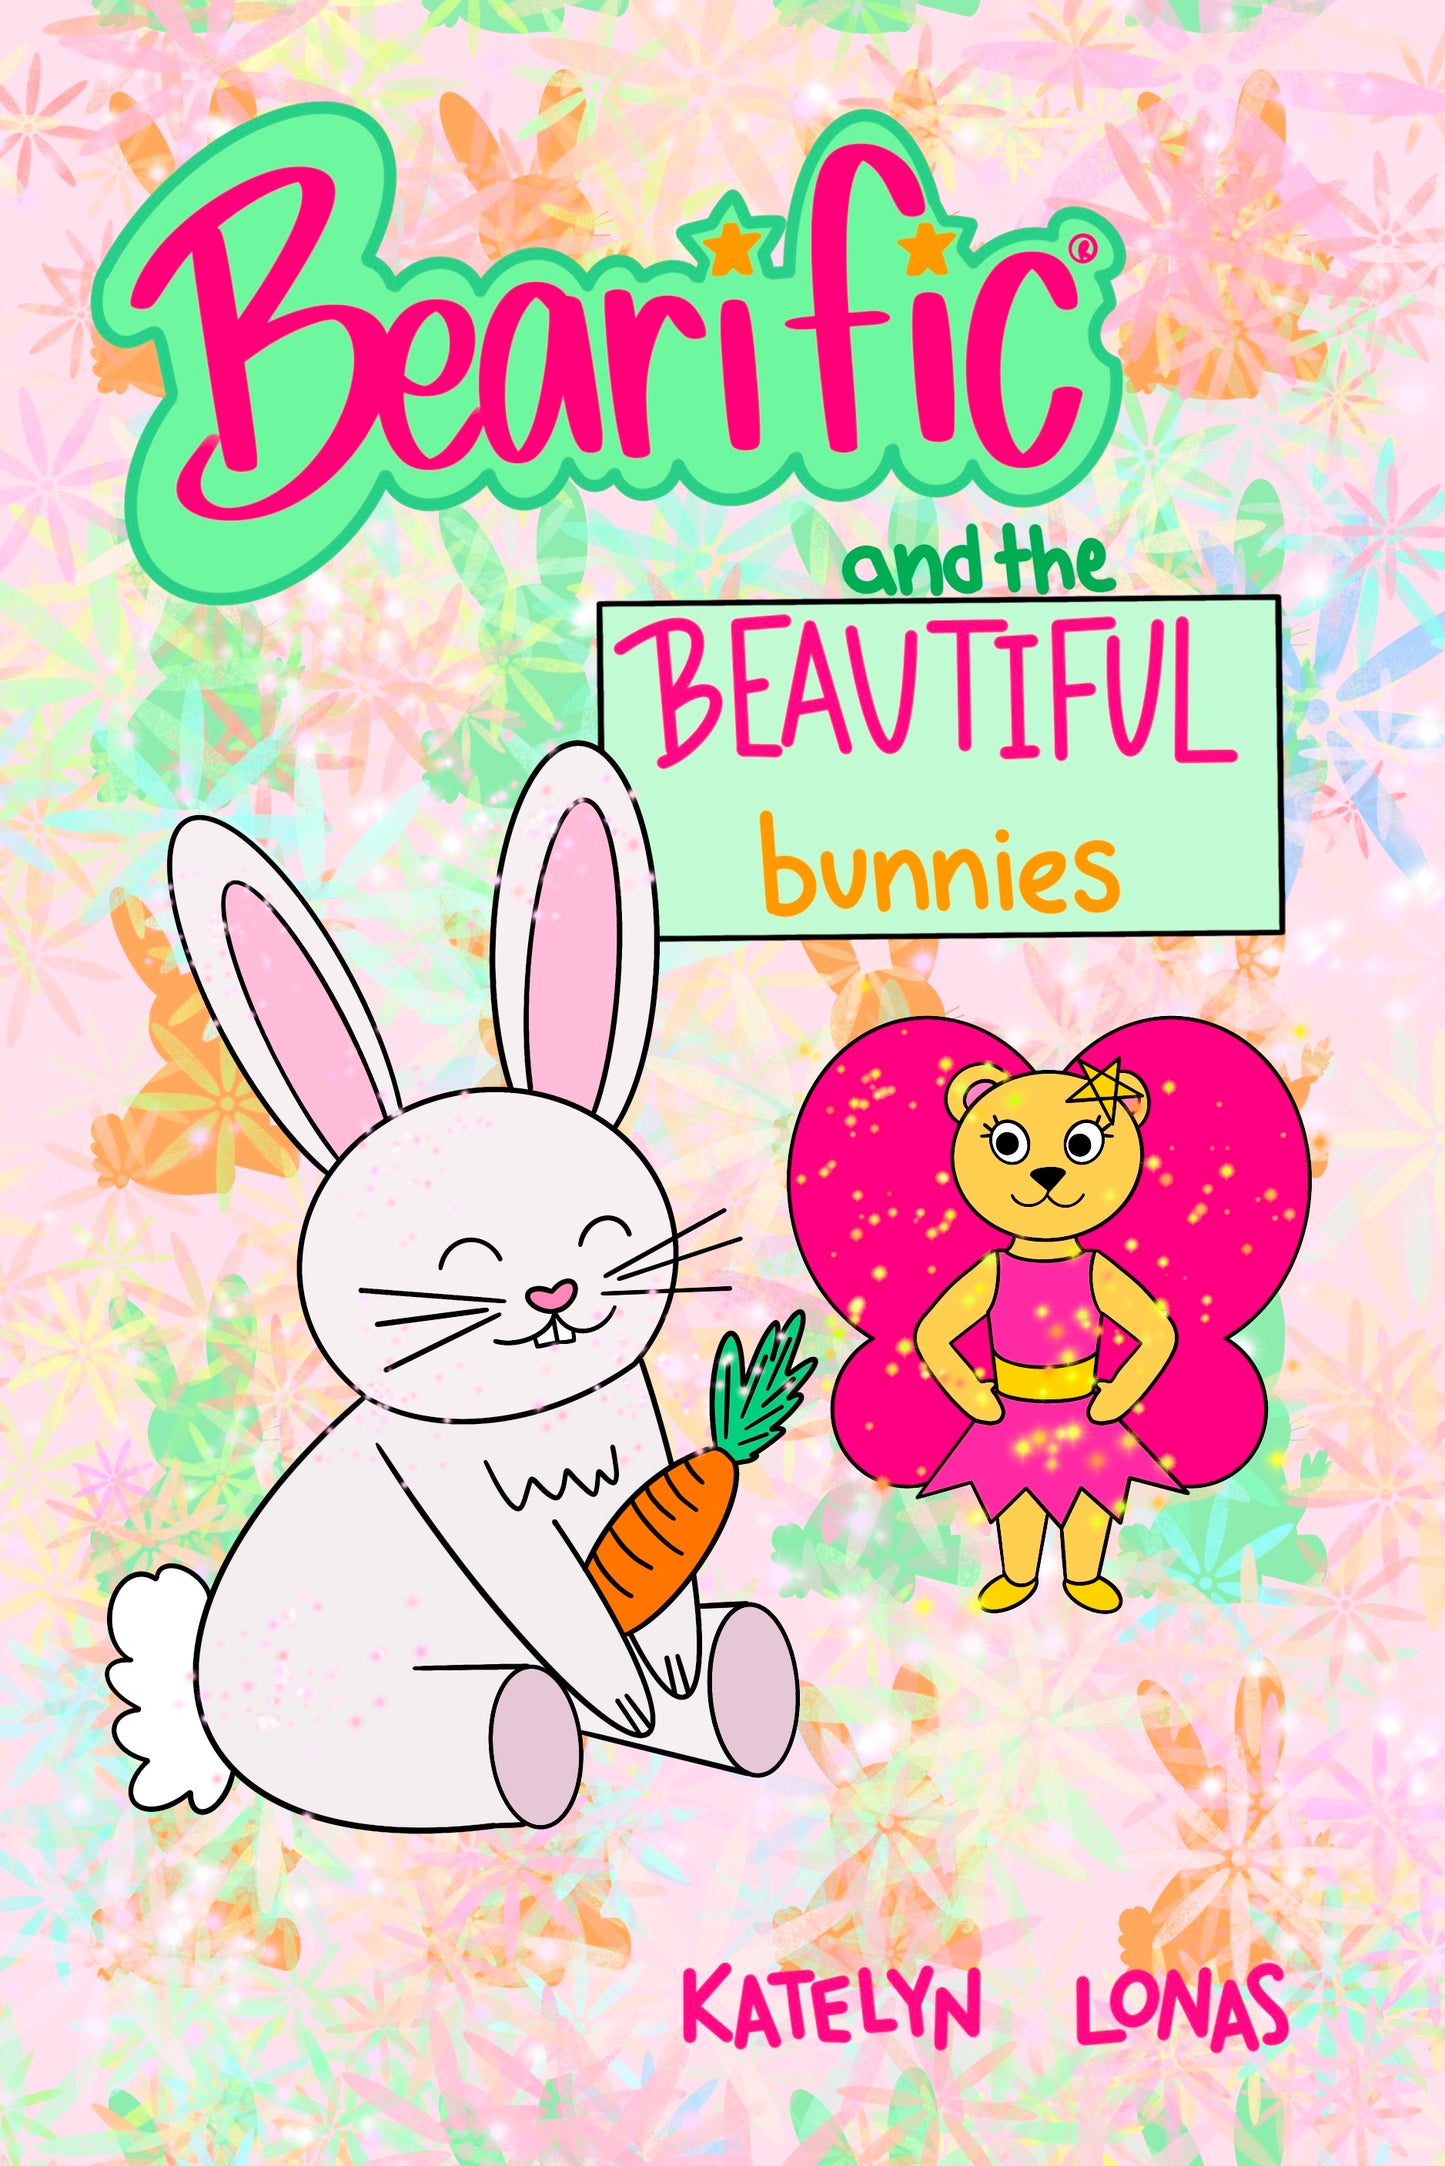 Bearific and the Beautiful Bunnies